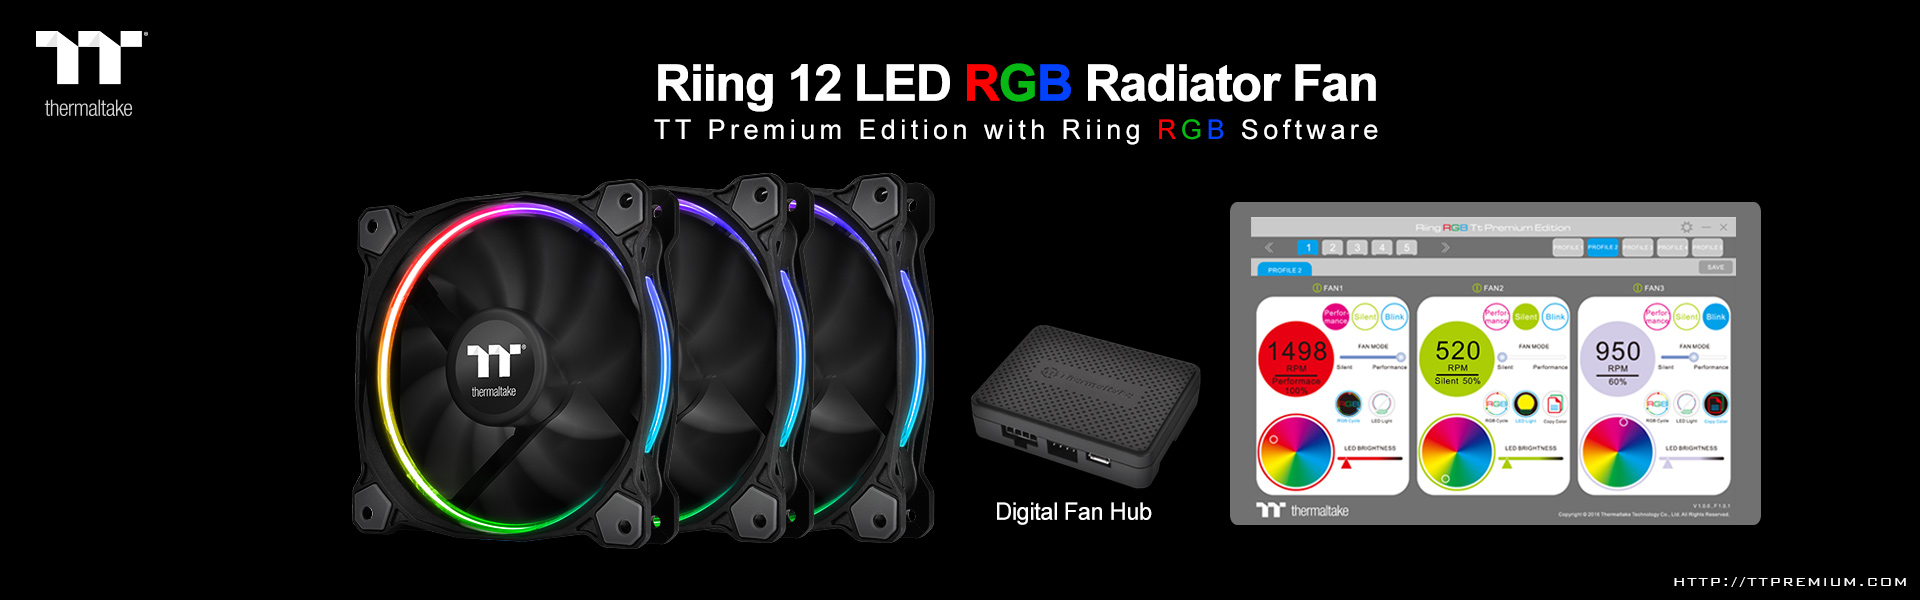 Thermaltake Riing LED RGB Radiator Fan TT Premium Edition